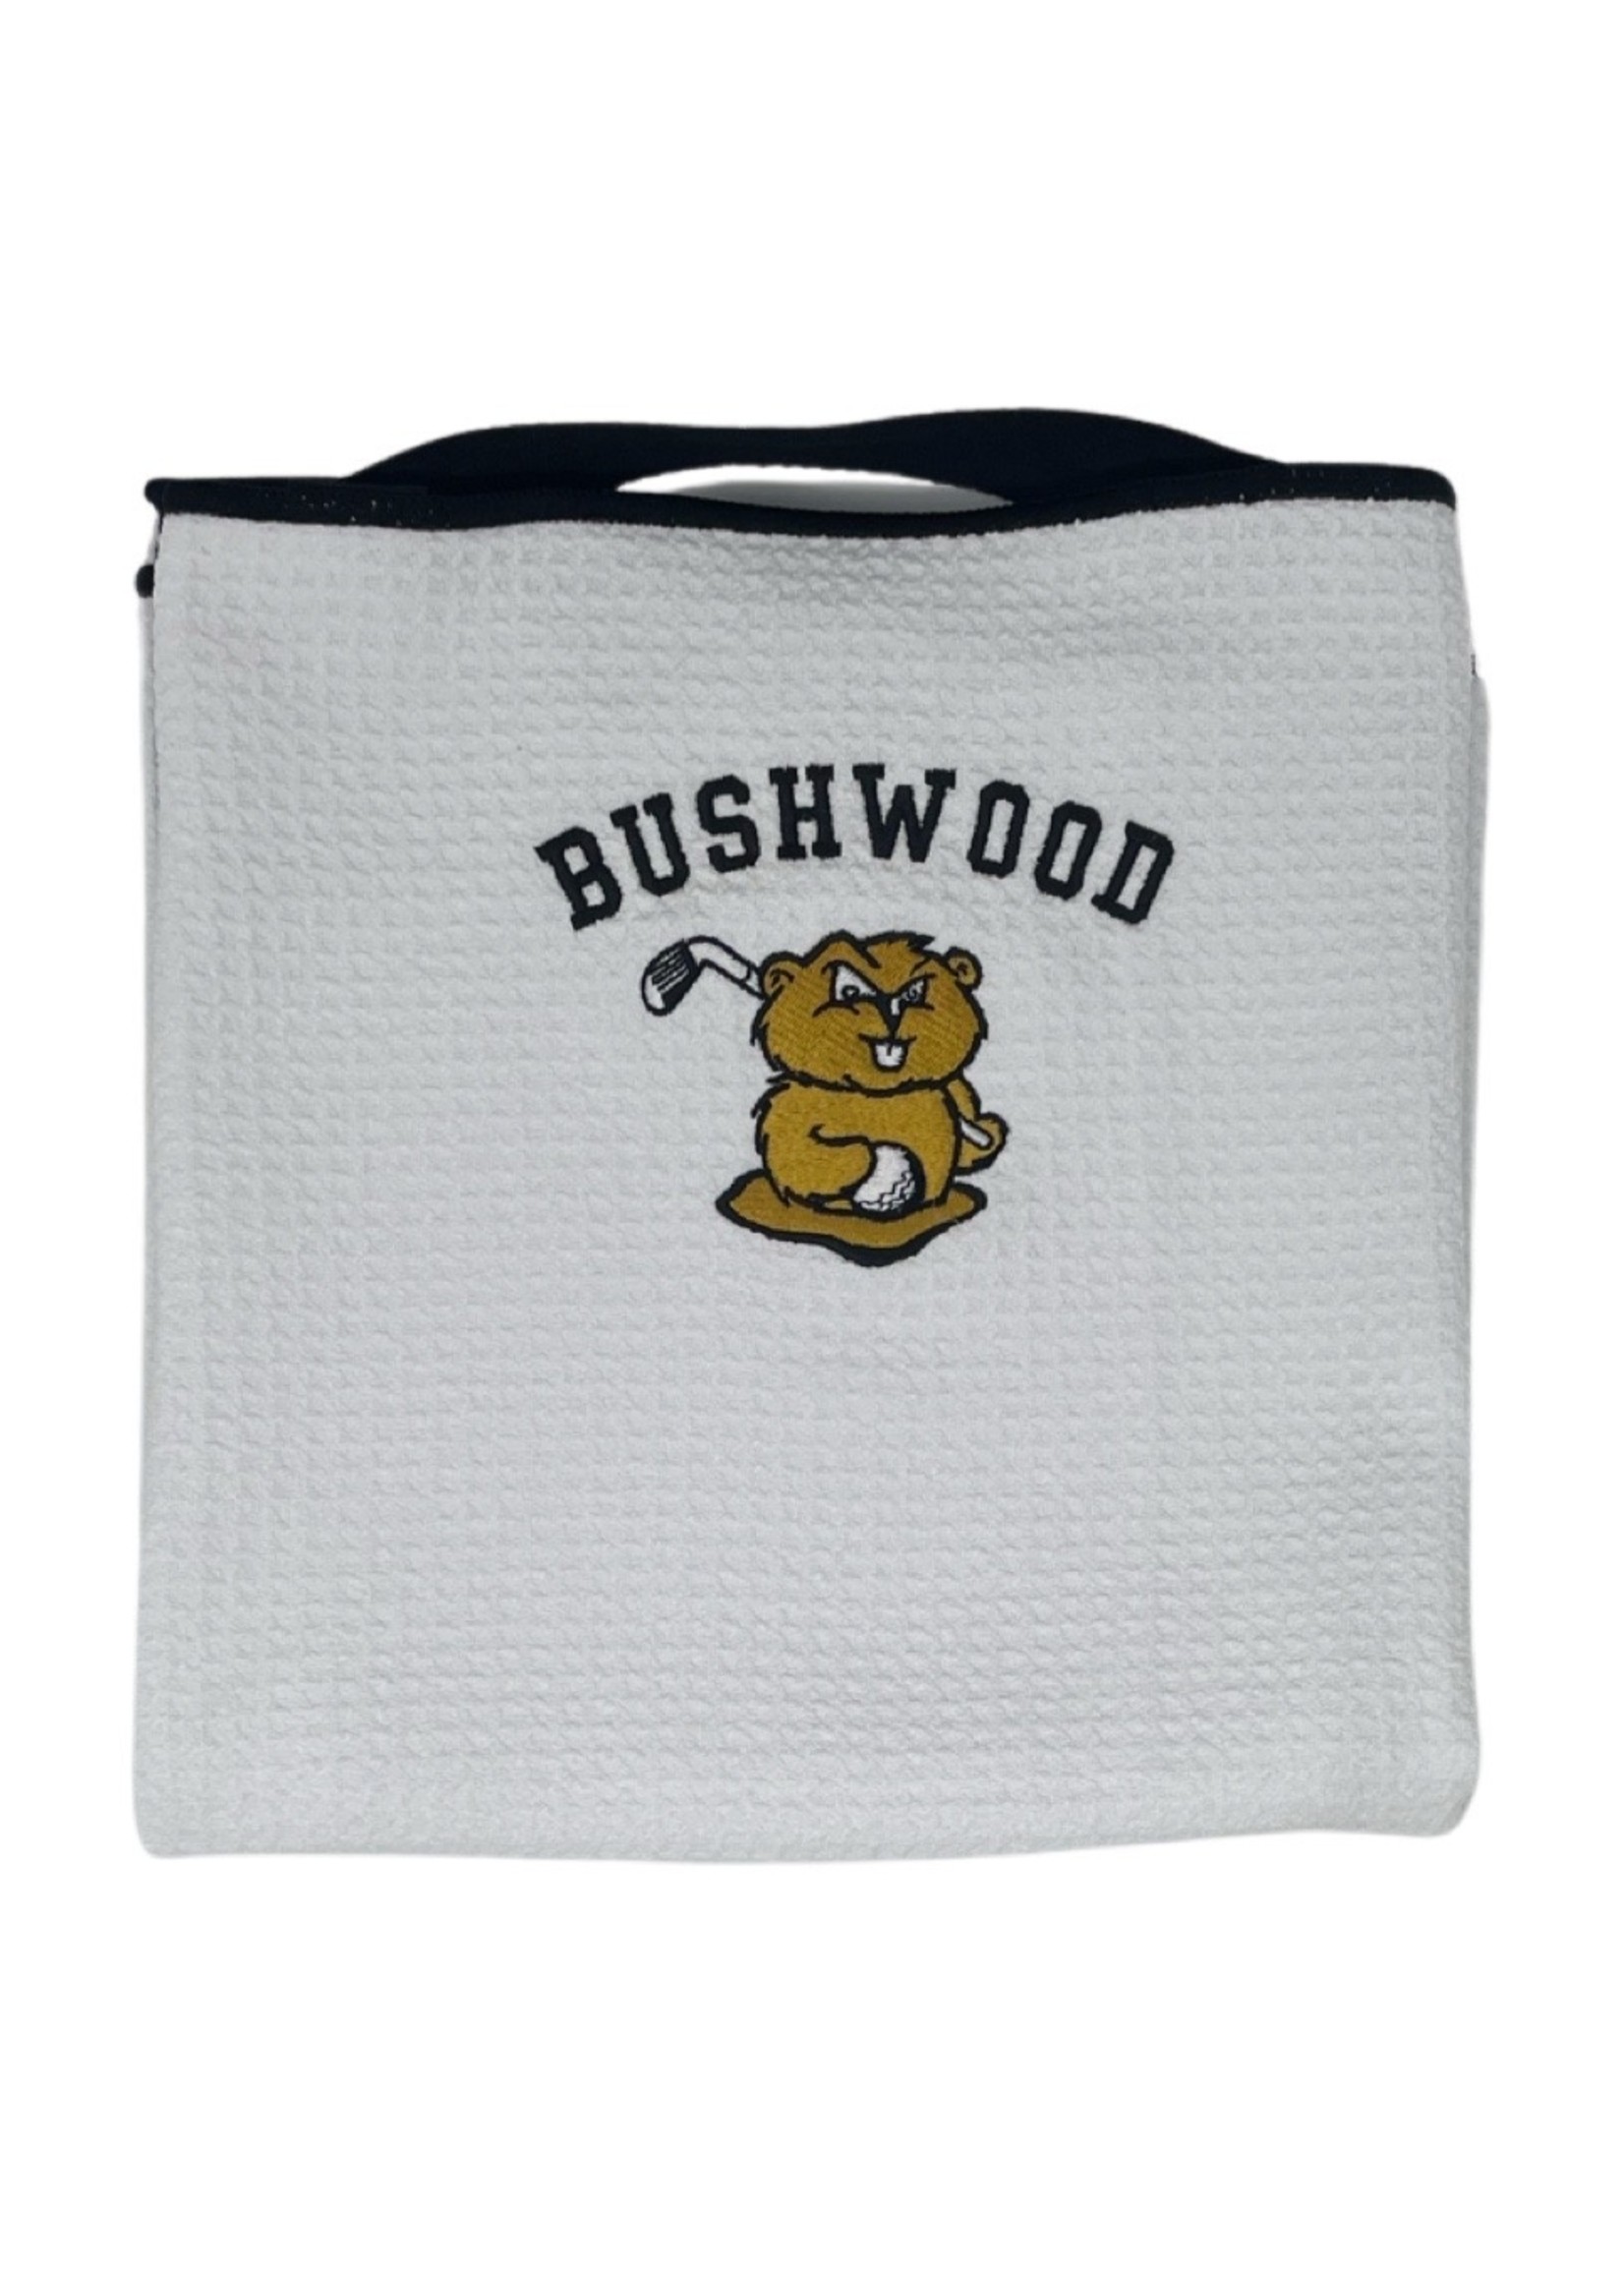 Titleist Bushwood Callaway Players Towel